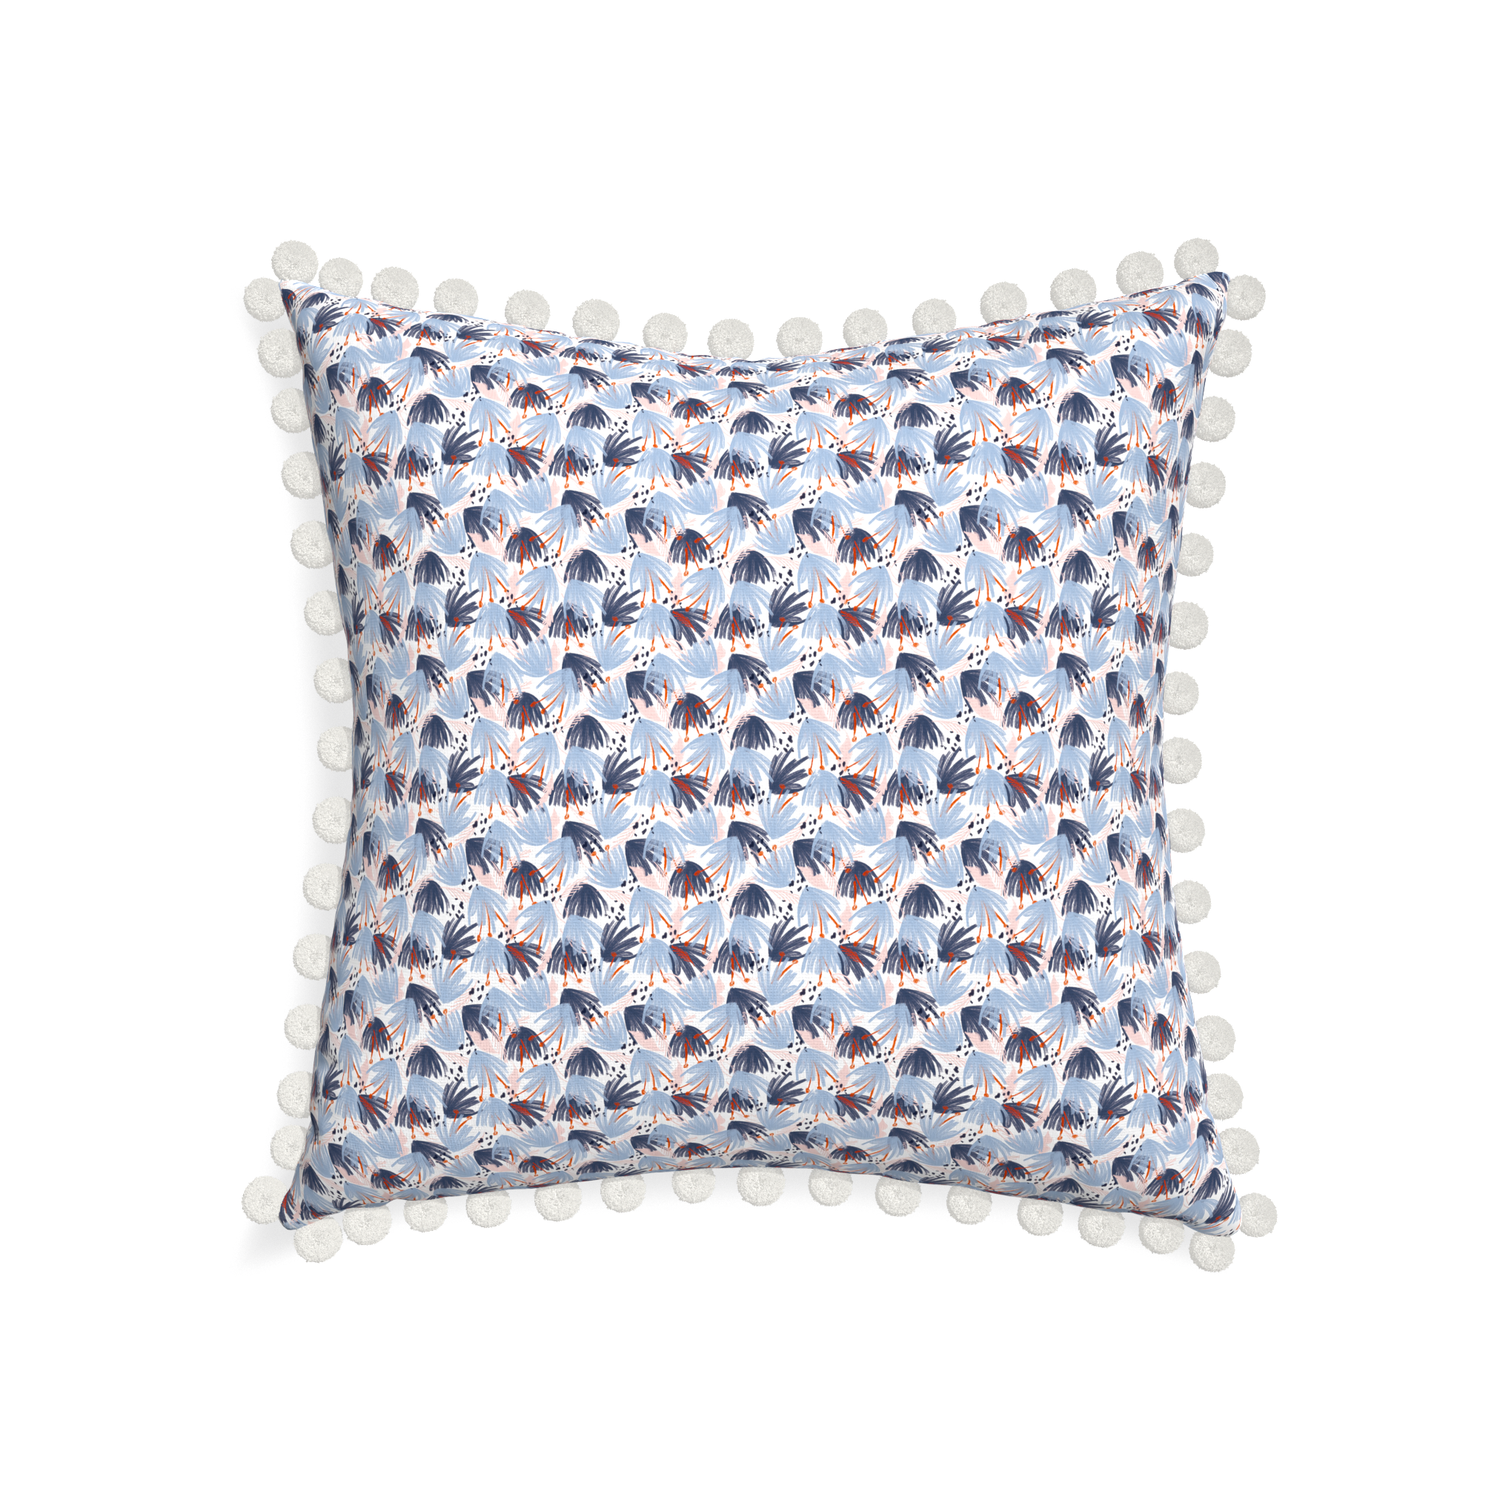 22-square eden blue custom pillow with snow pom pom on white background